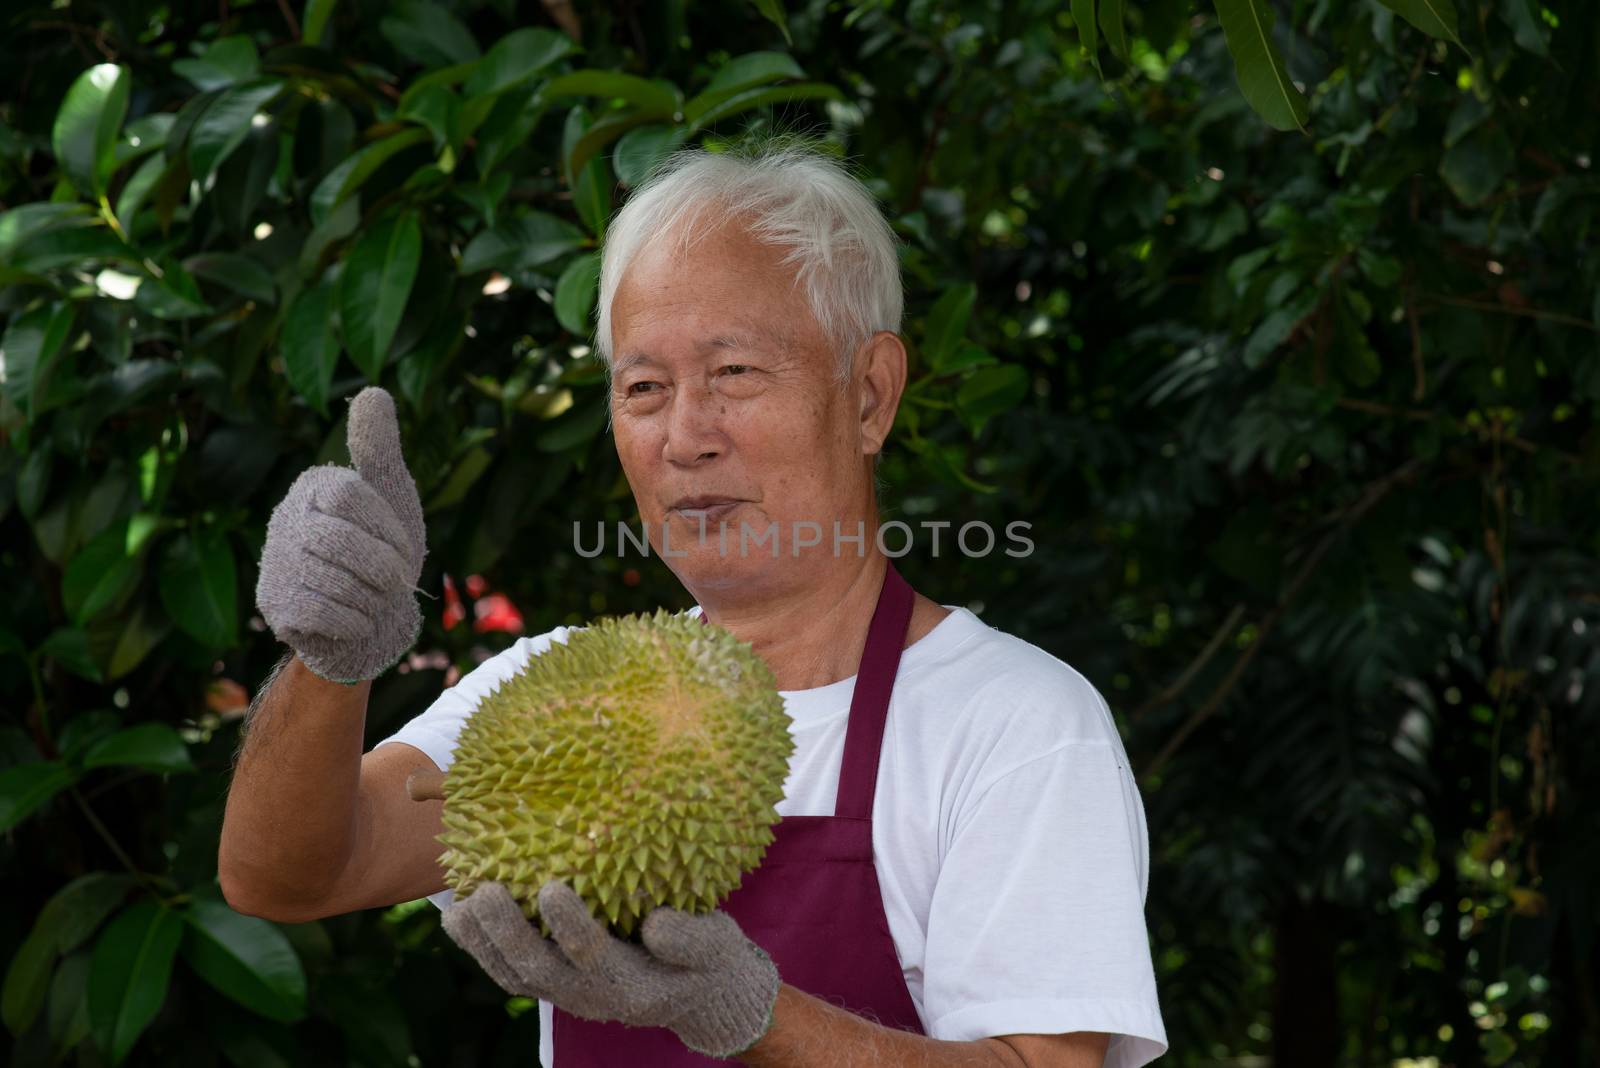 Farmer and musang king durian  by szefei